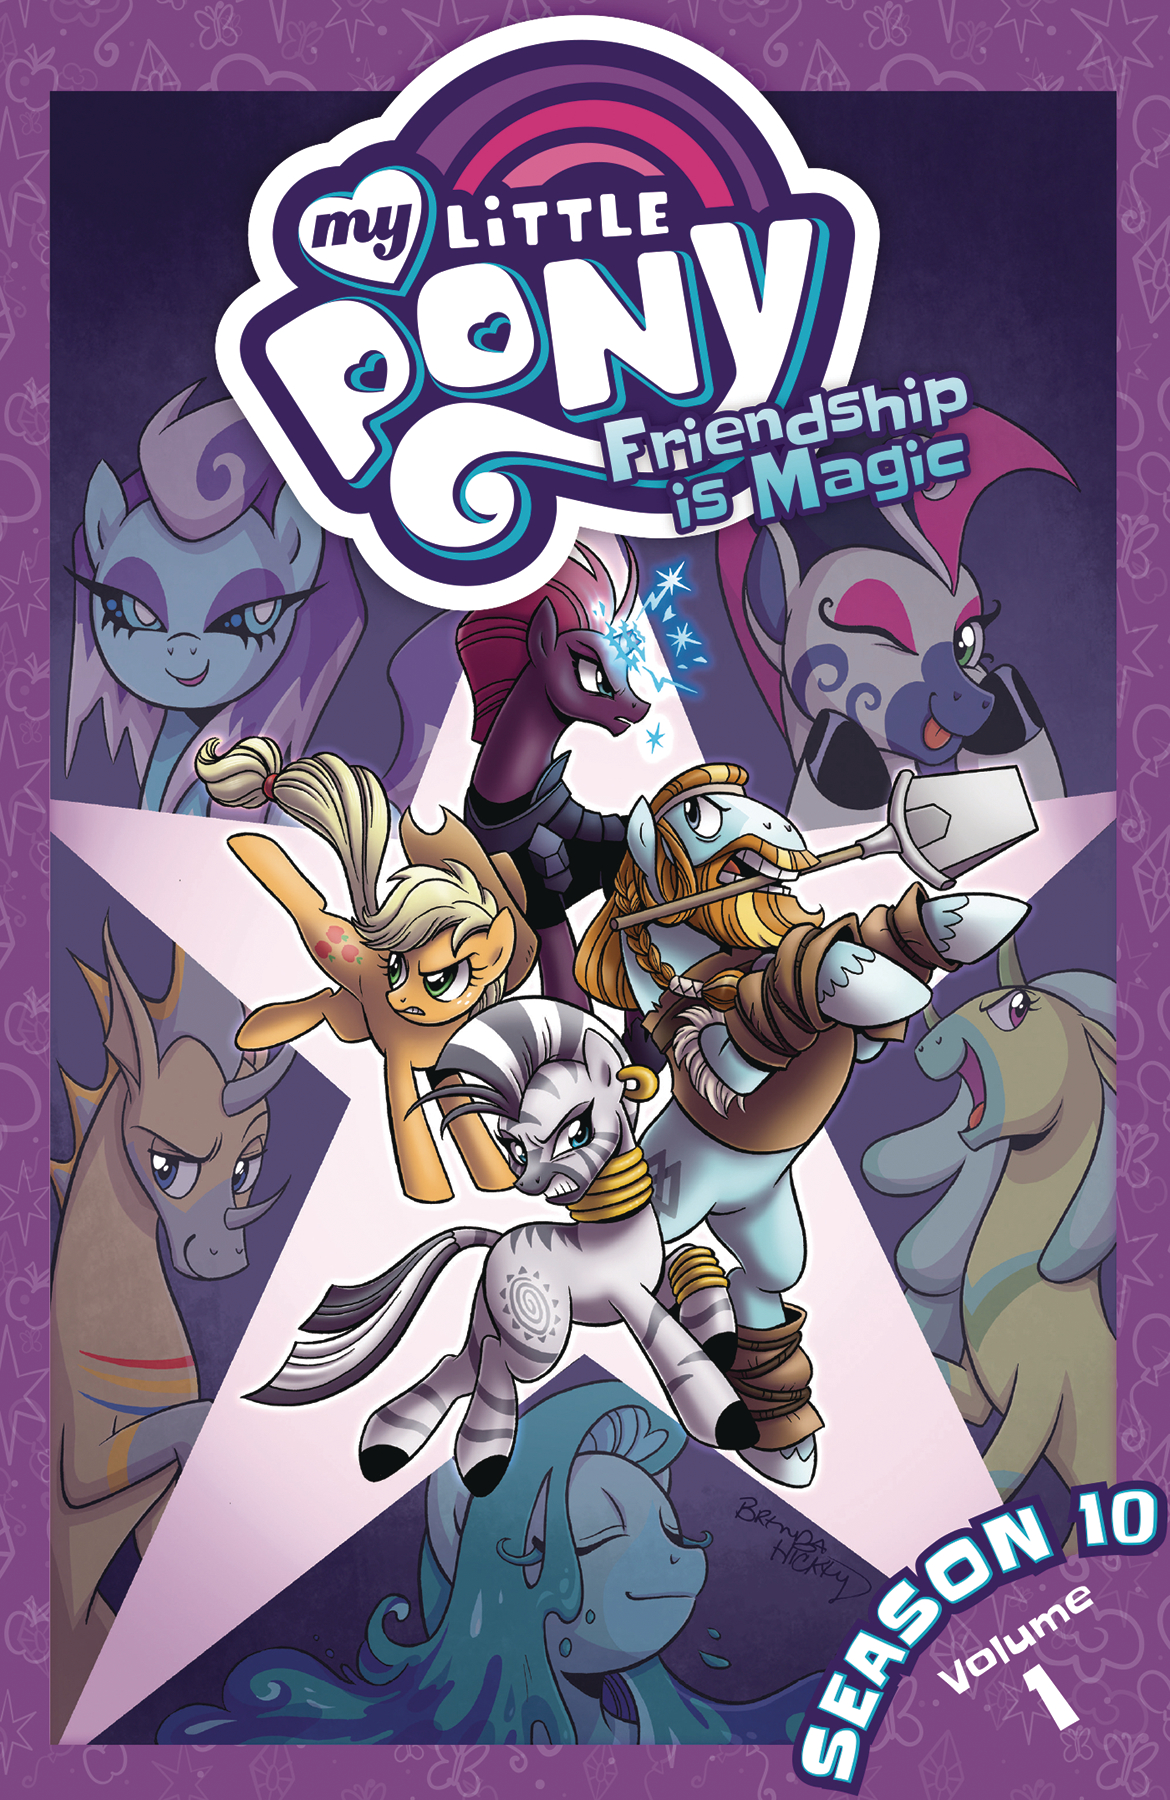 My Little Pony Friendship Is Magic Season 10 Graphic Novel Volume 1